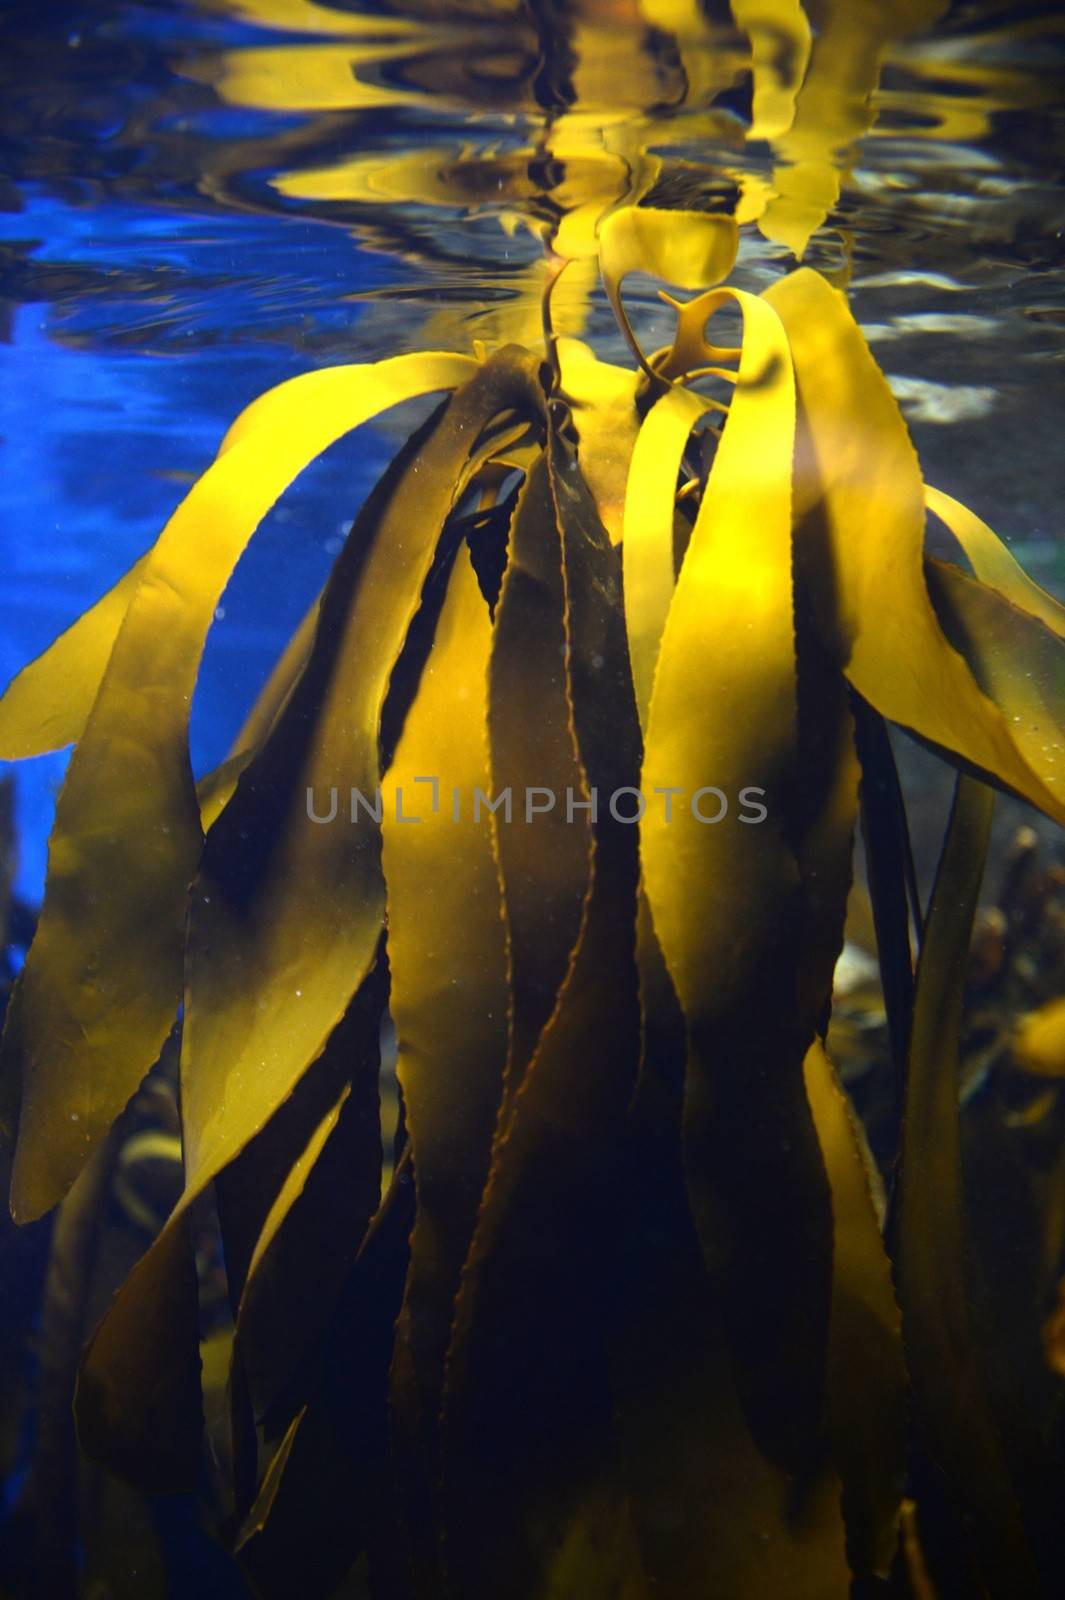 Underwater Aquaium by Kitch